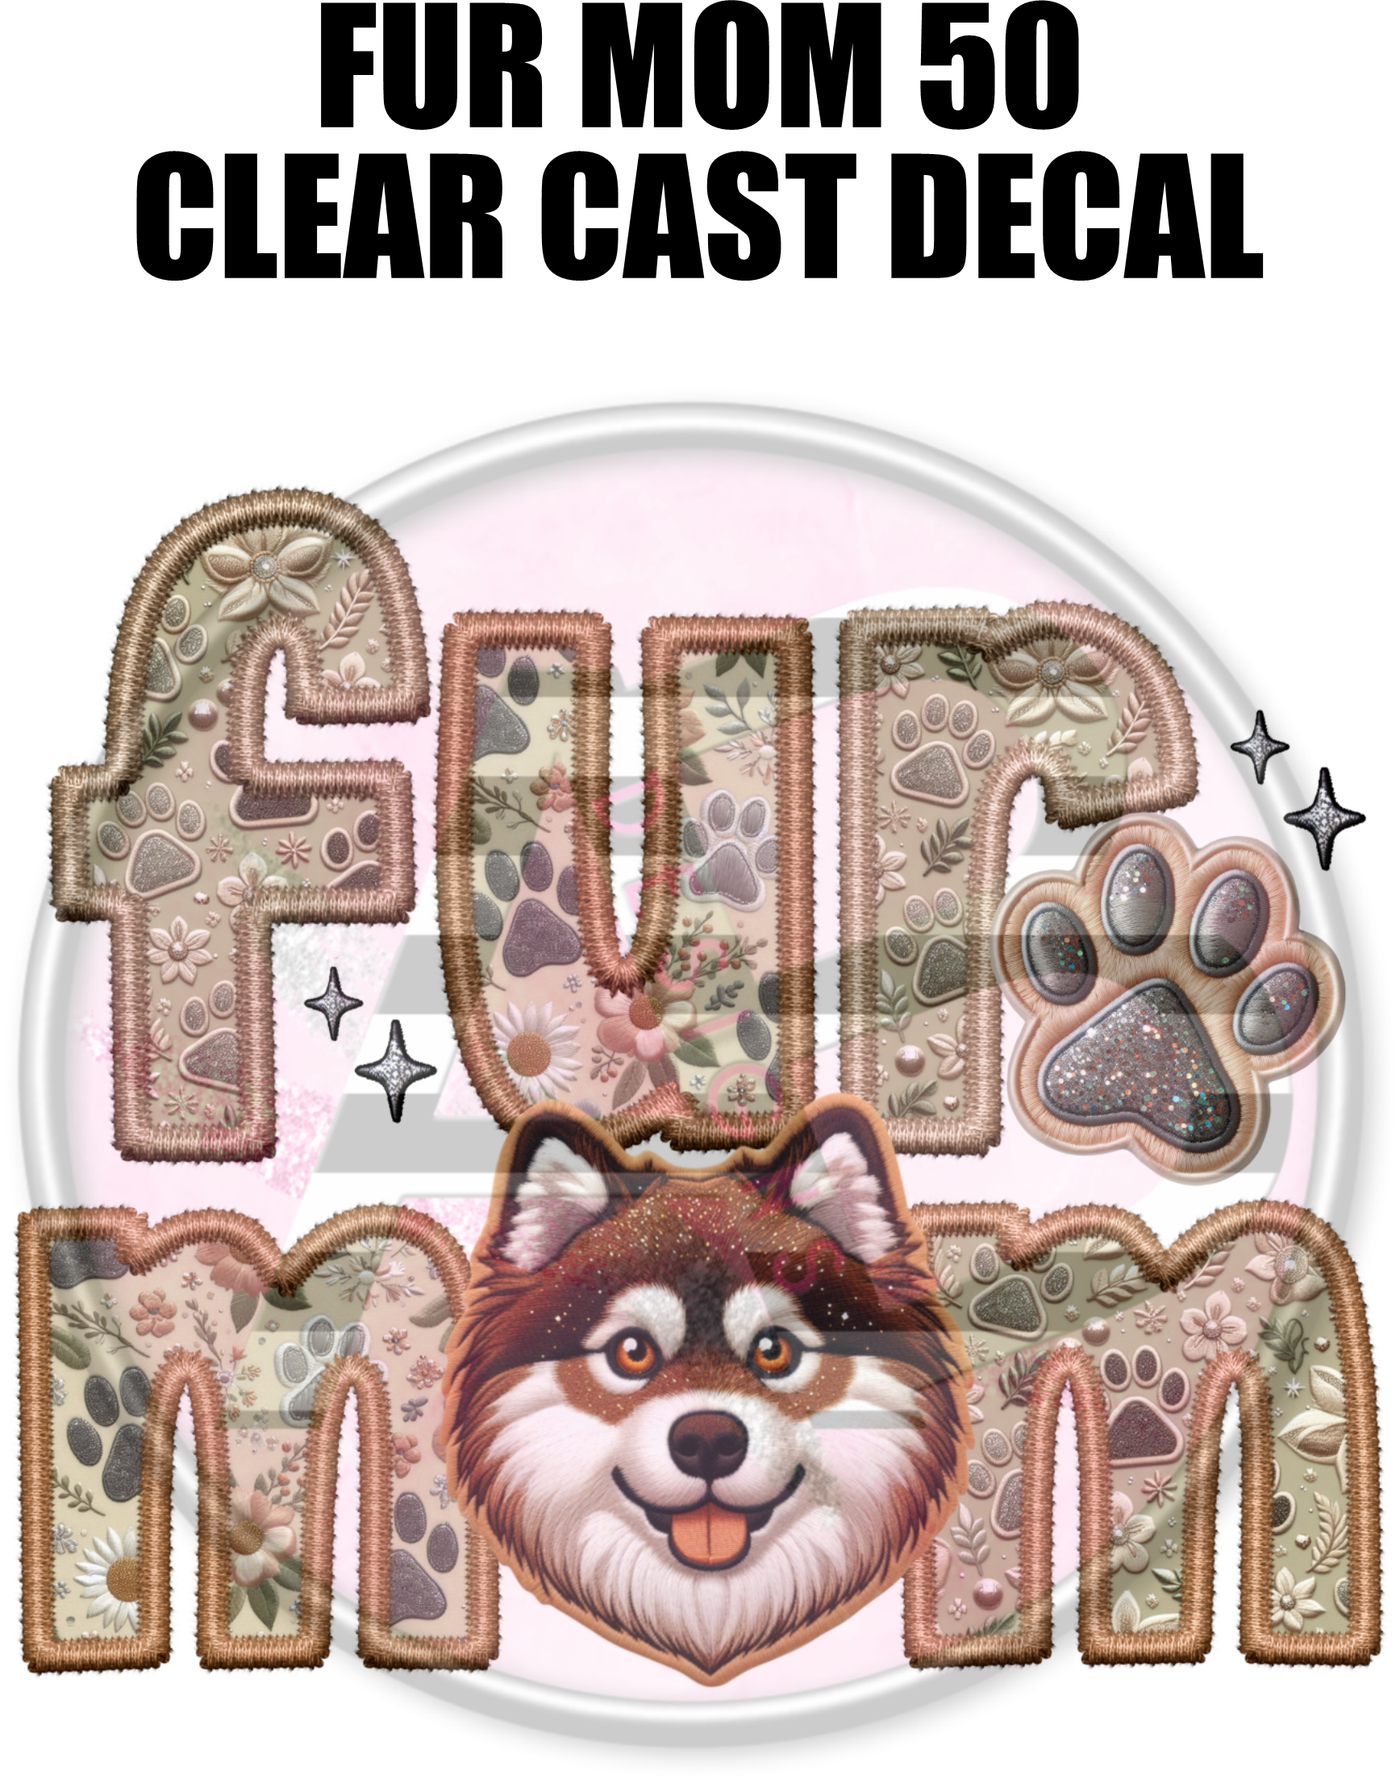 Fur Mom 50 - Clear Cast Decal